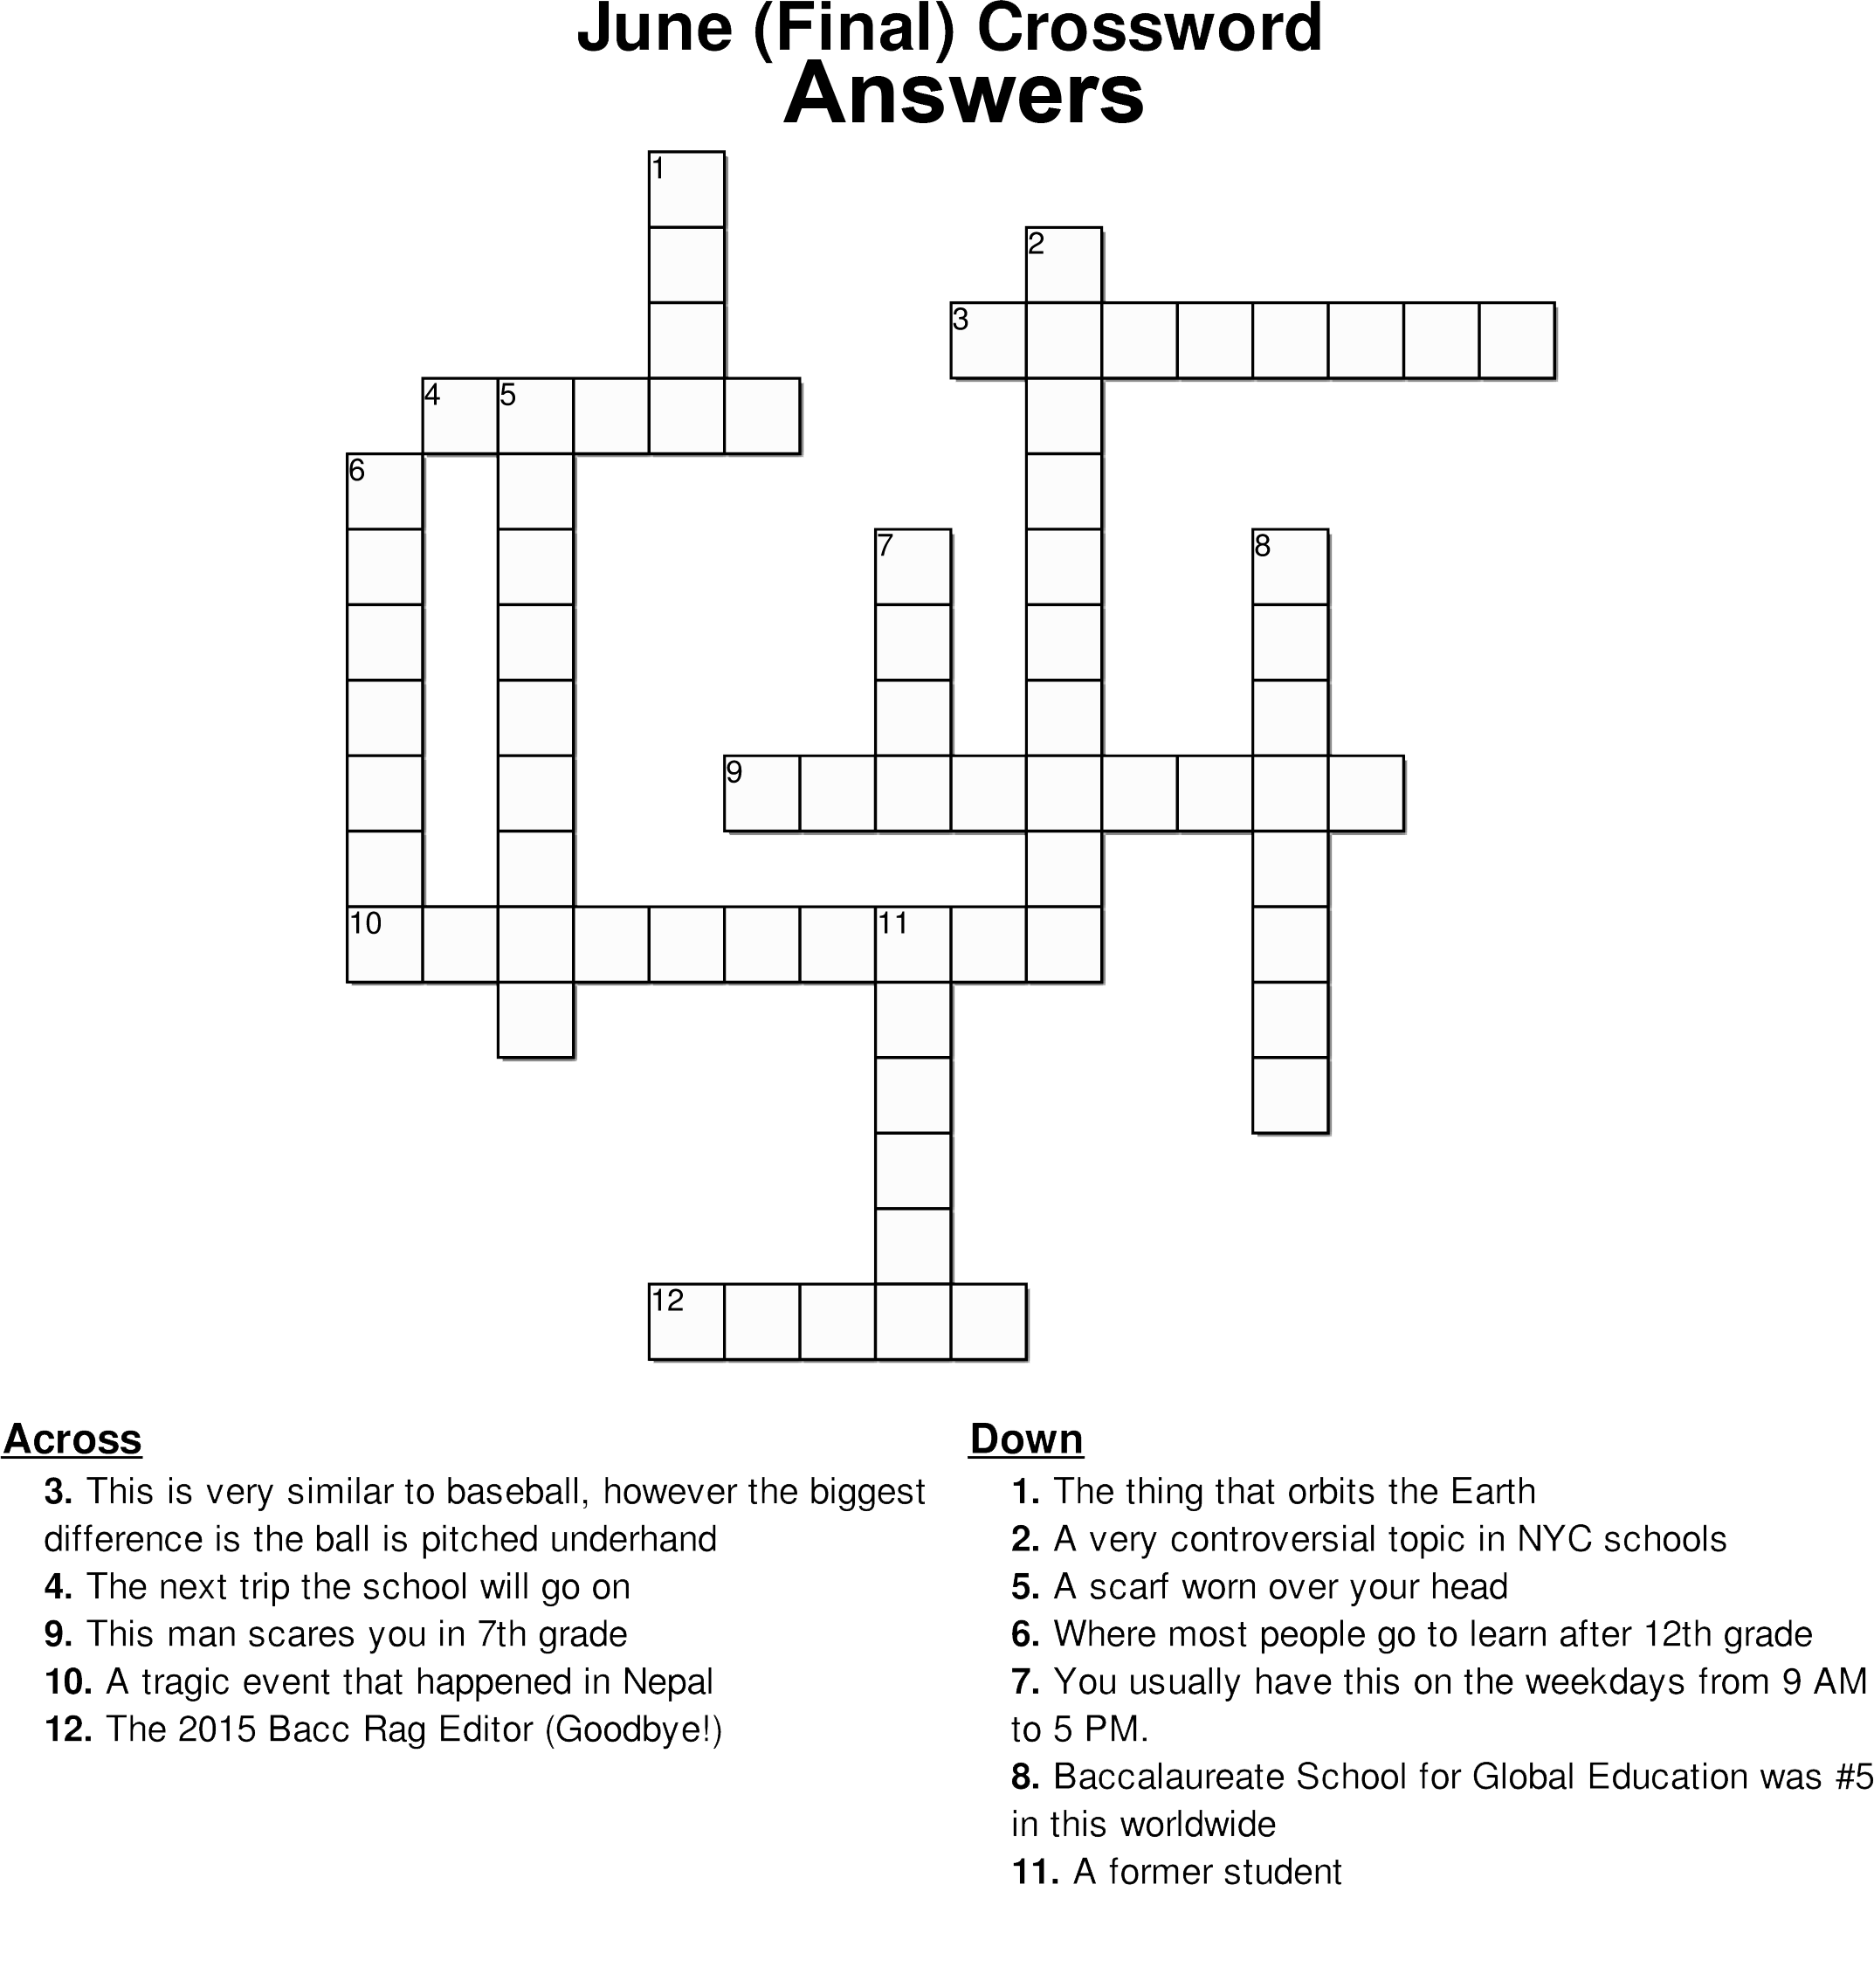 Crossword Puzzle In Science Crossword Puzzle Gallery | Jymba ...